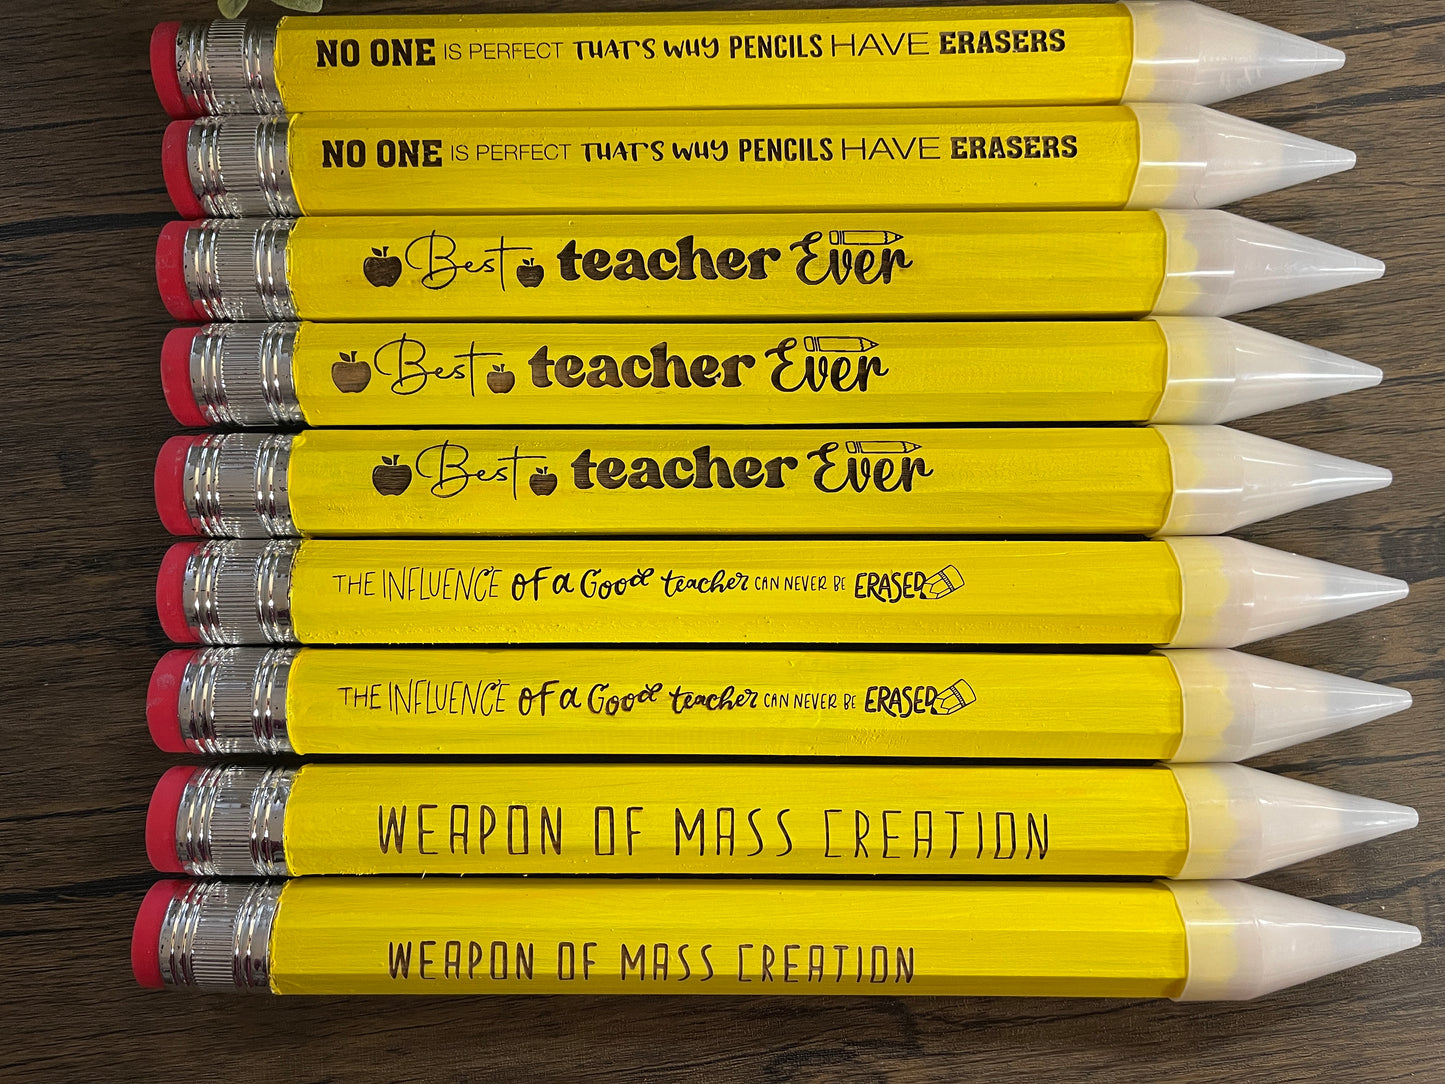 Giant Pencils